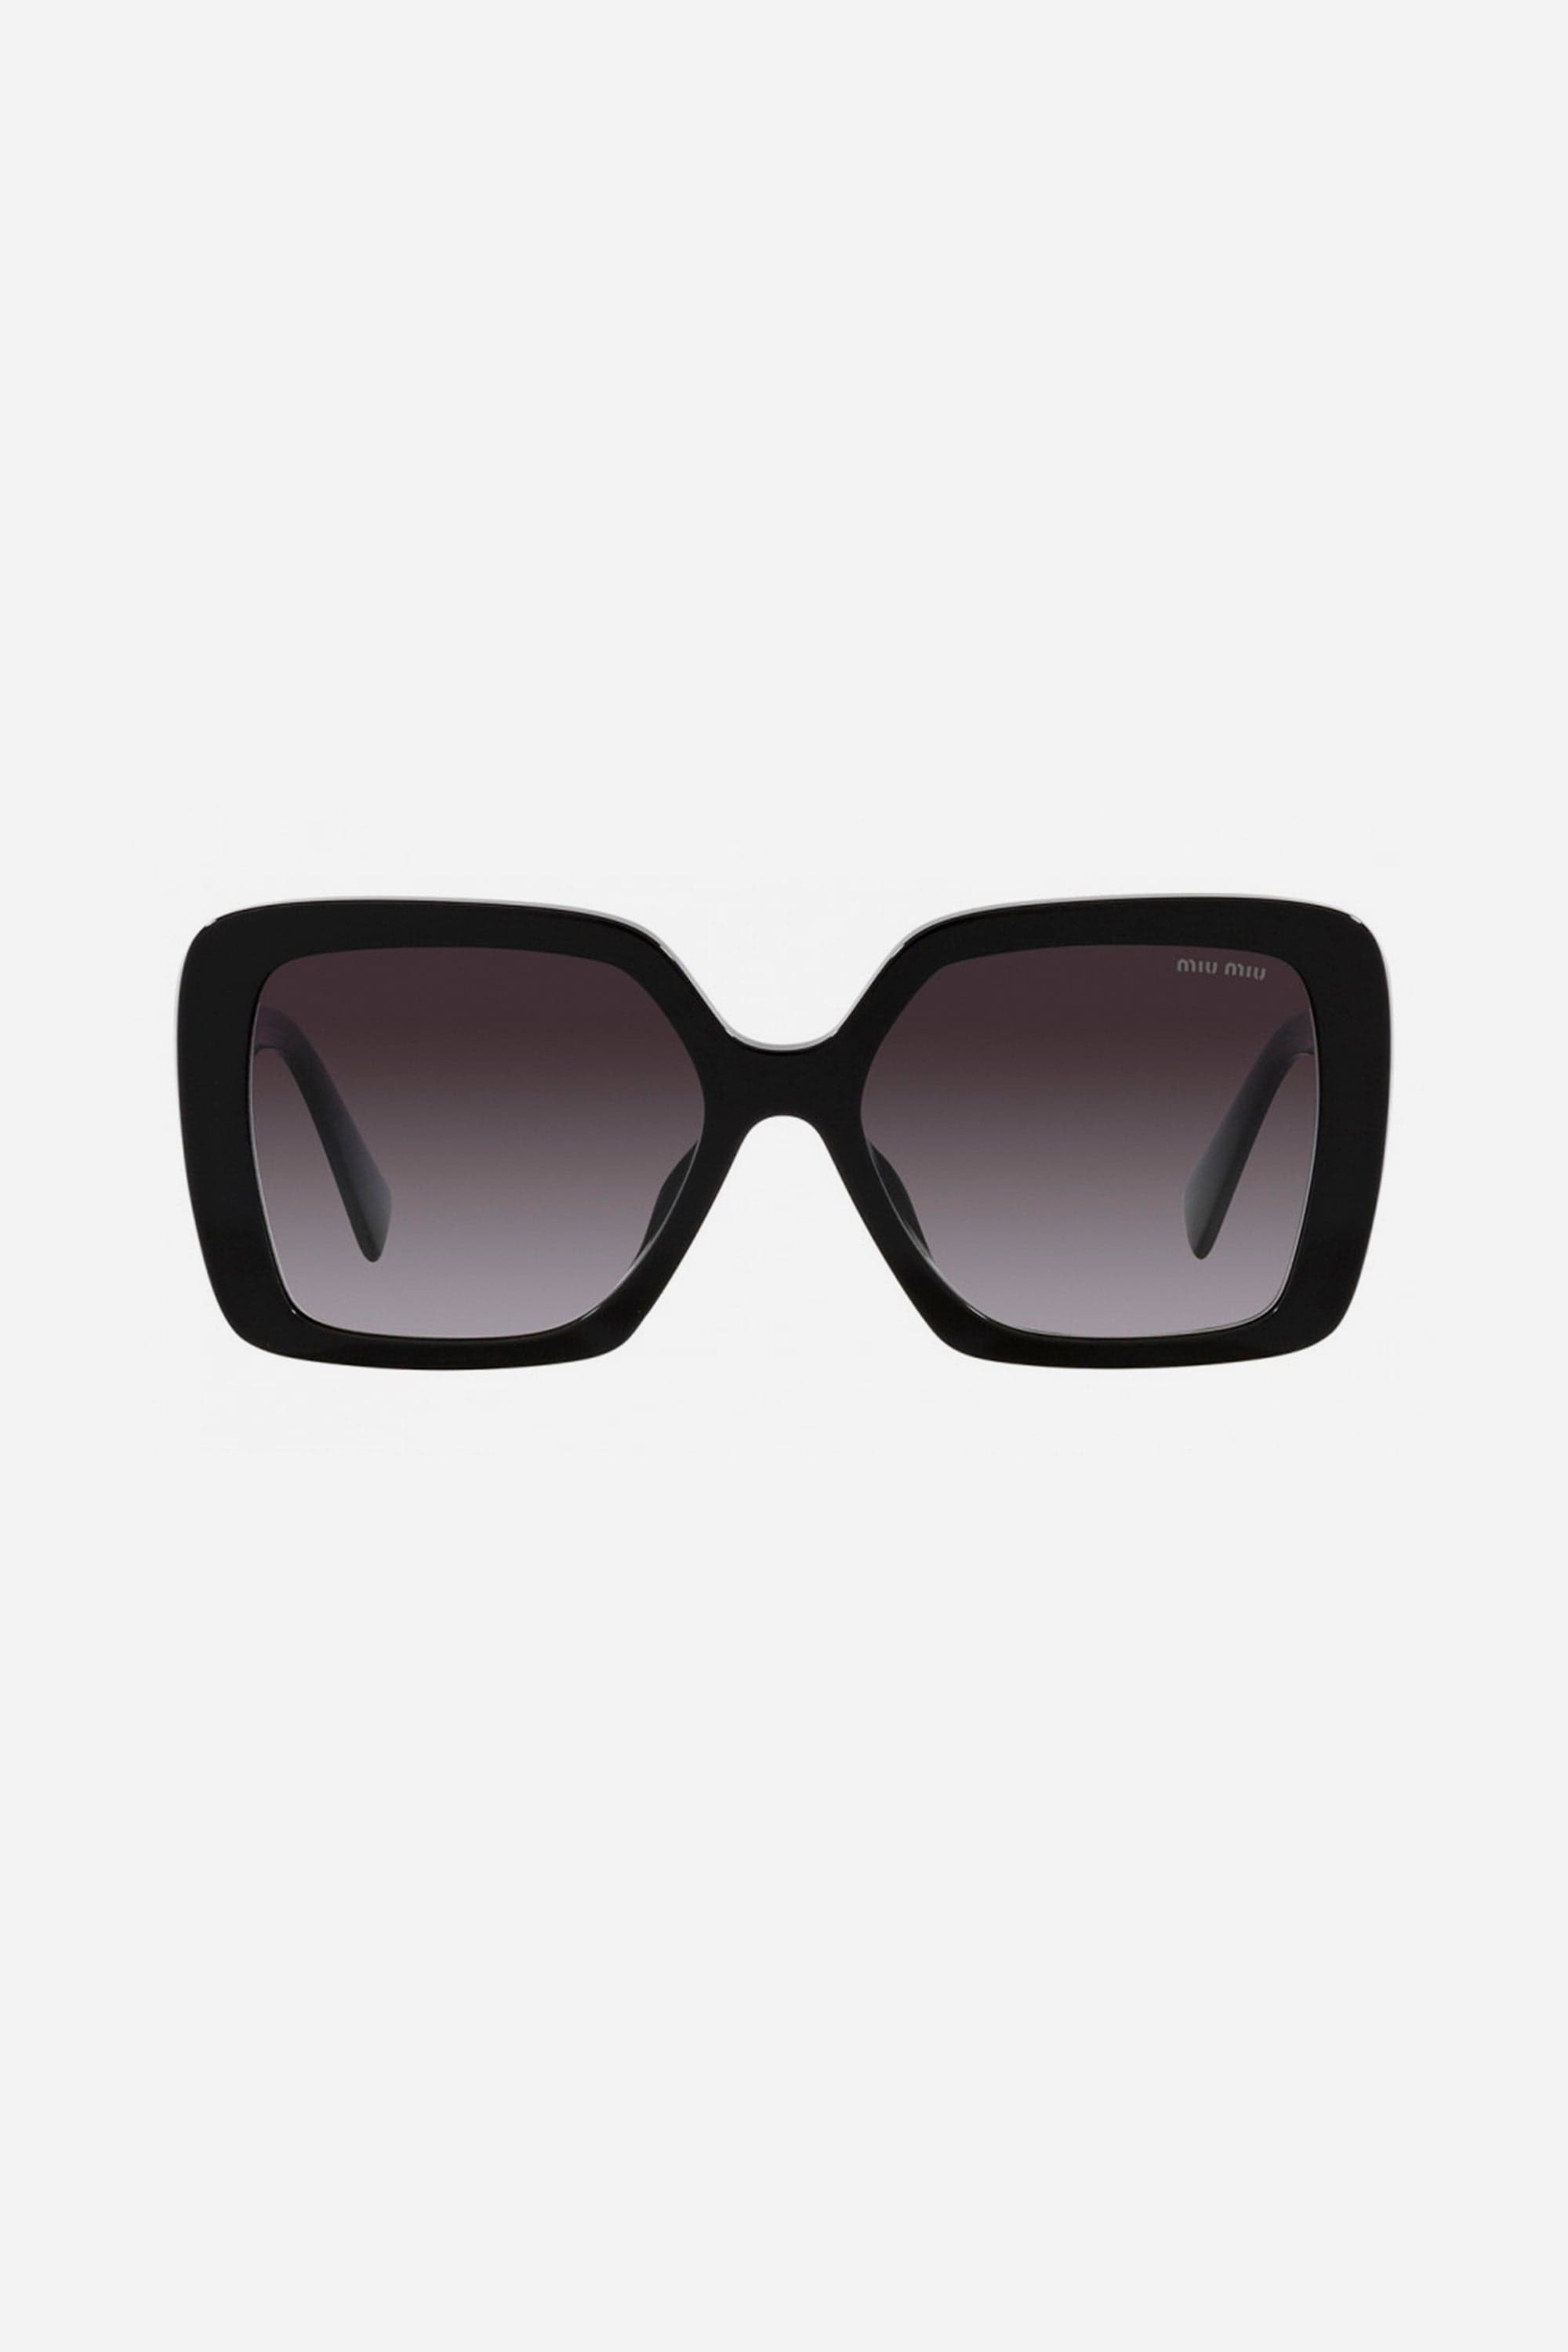 Miu Miu squared black sunglasses - Eyewear Club